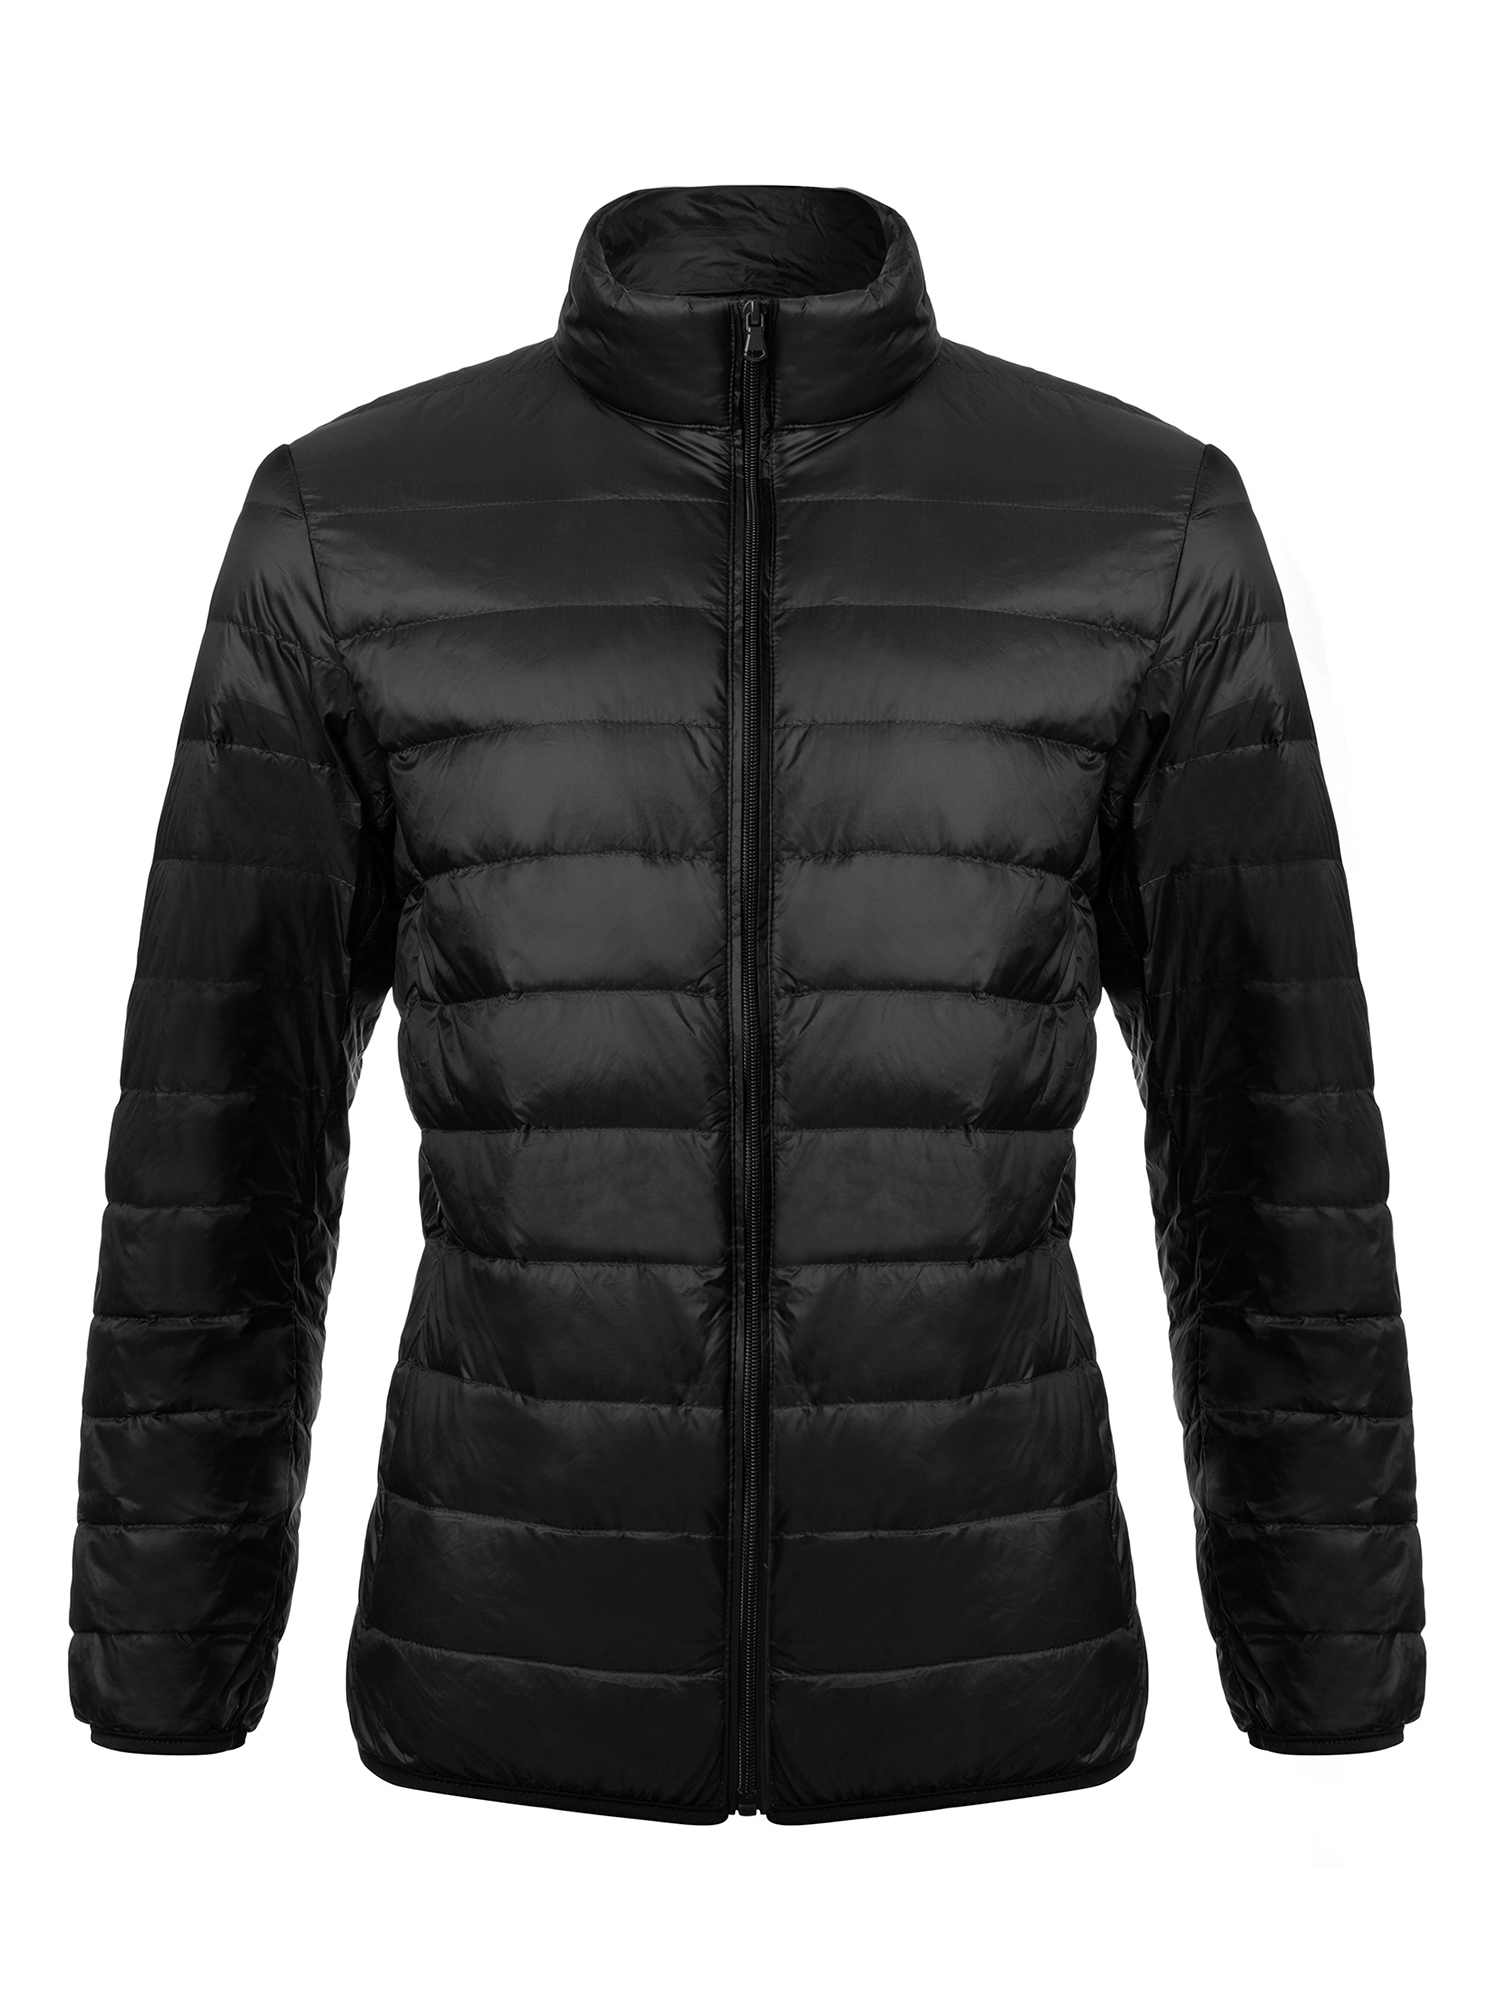 SAYFUT Men's Down Winter Packable Jacket Big & Tall Sizes M-4XL Outwear Jacket Coat Black/Blue/Gray - image 5 of 8